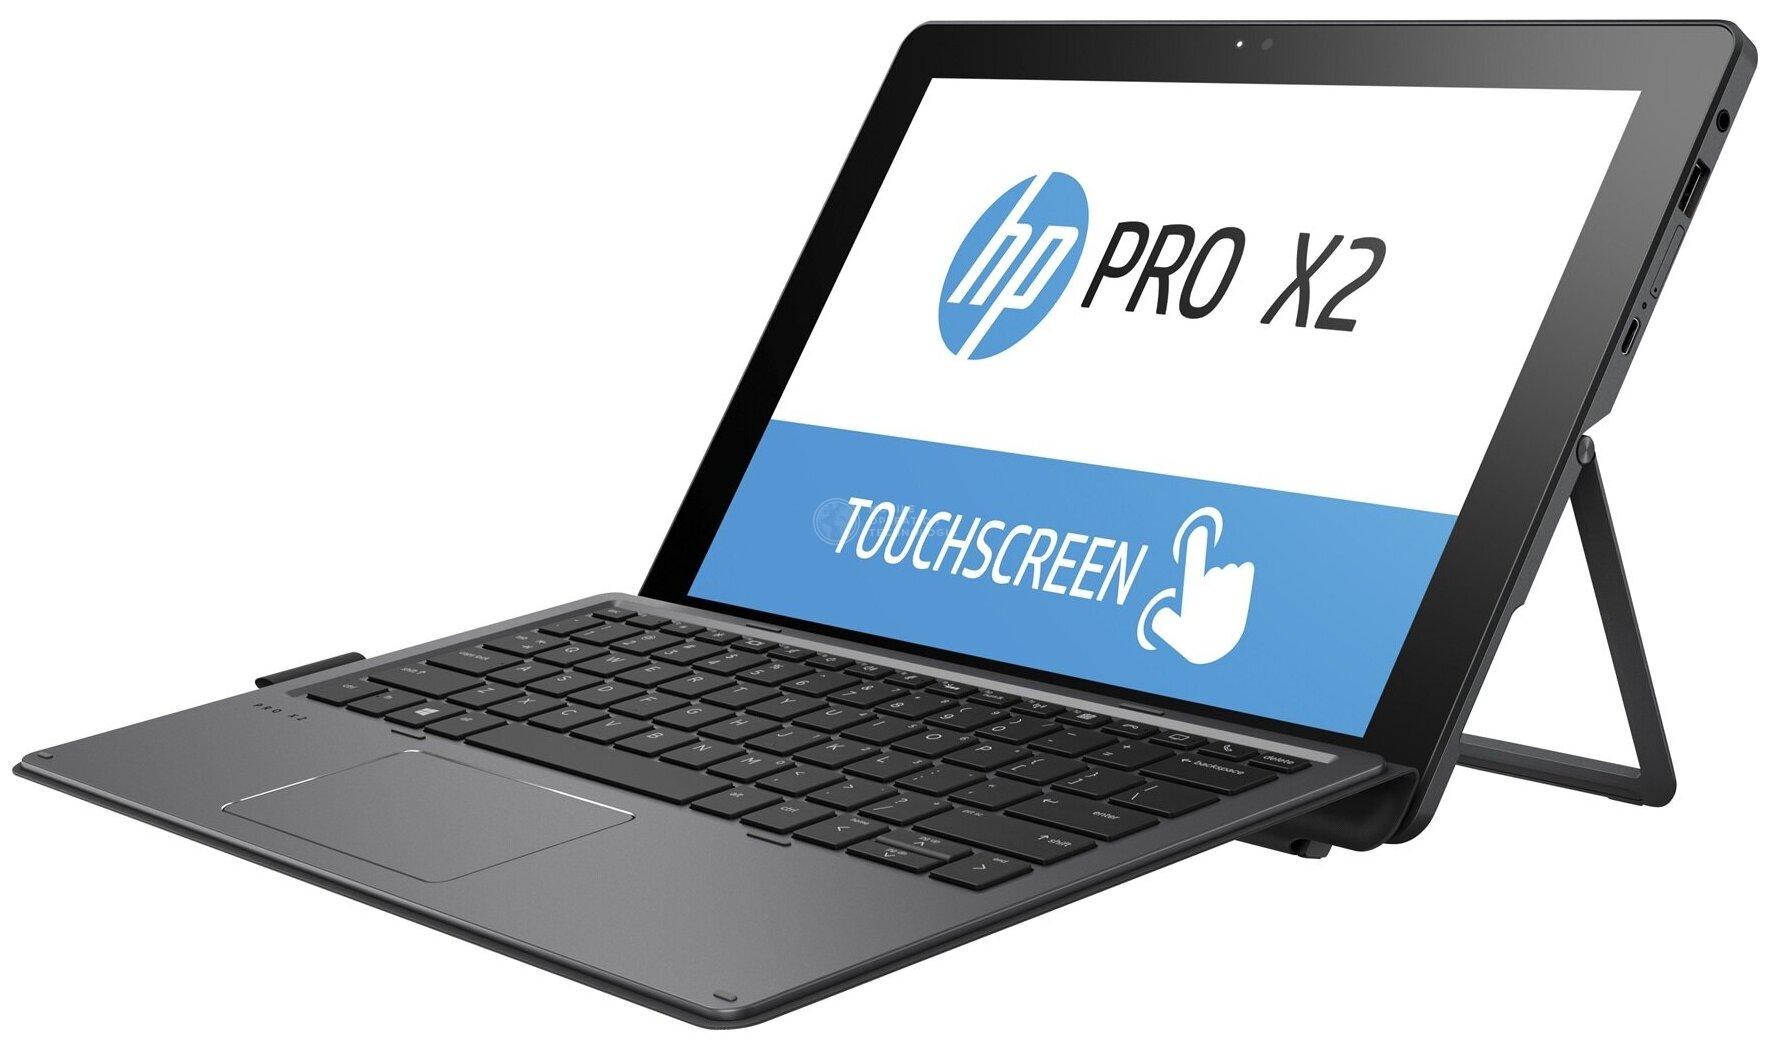 HP Pro x2 612 G2 i7